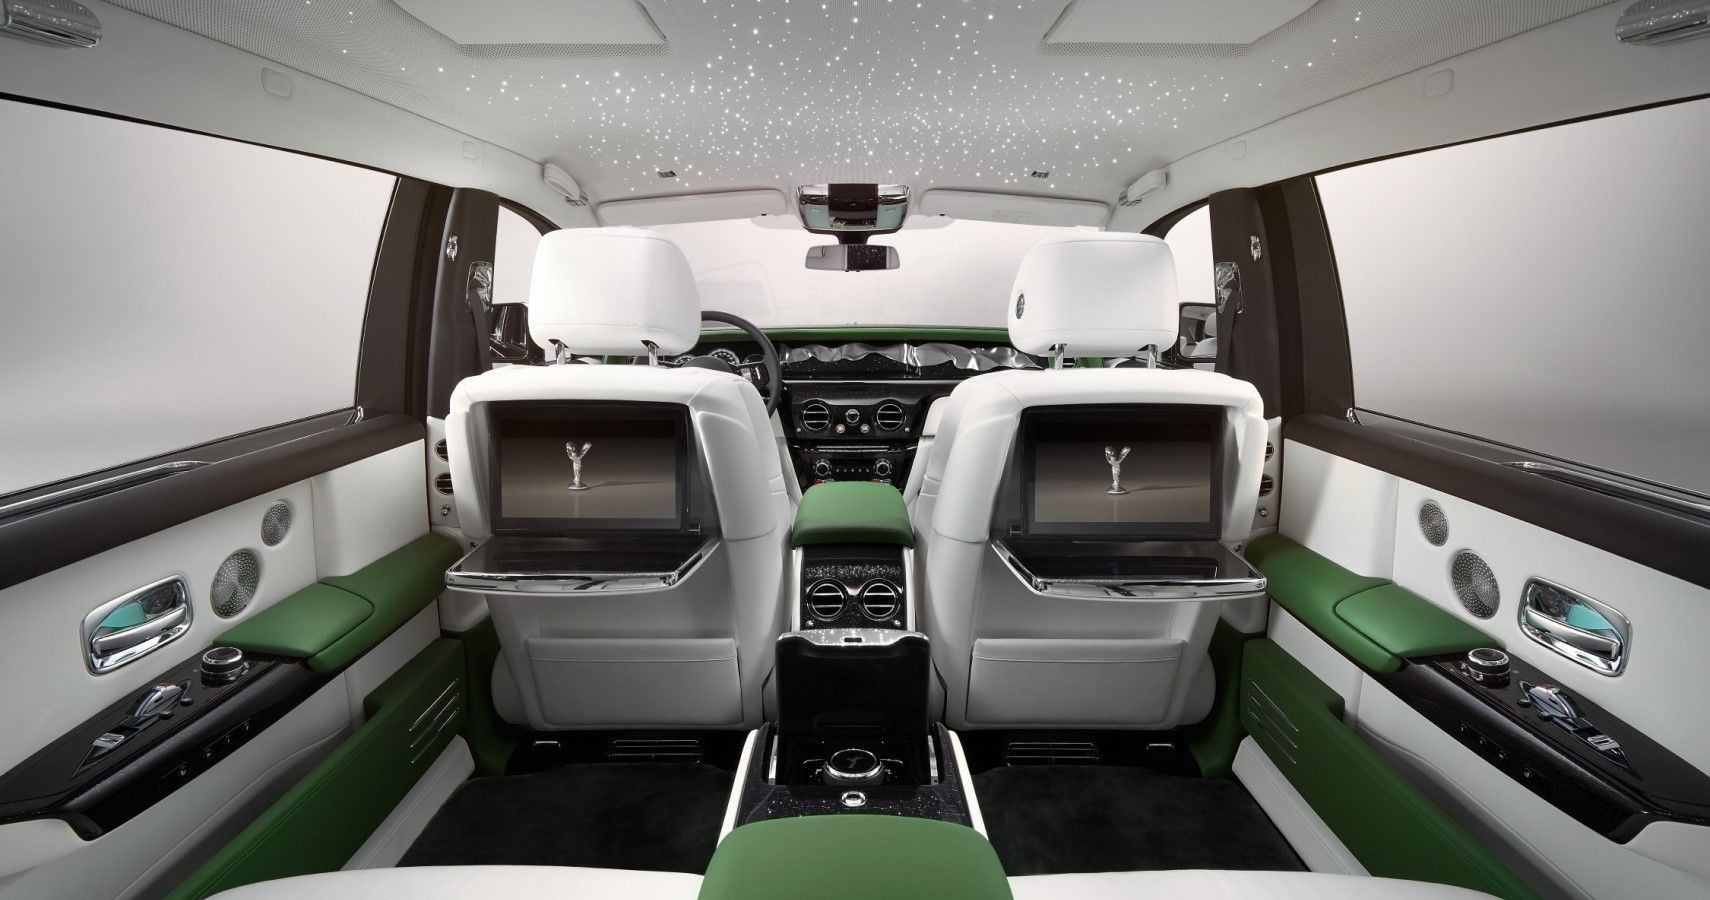 Bespoke Rolls-Royce Phantom Platino Has Seats Made From Bamboo Fabric - CNET